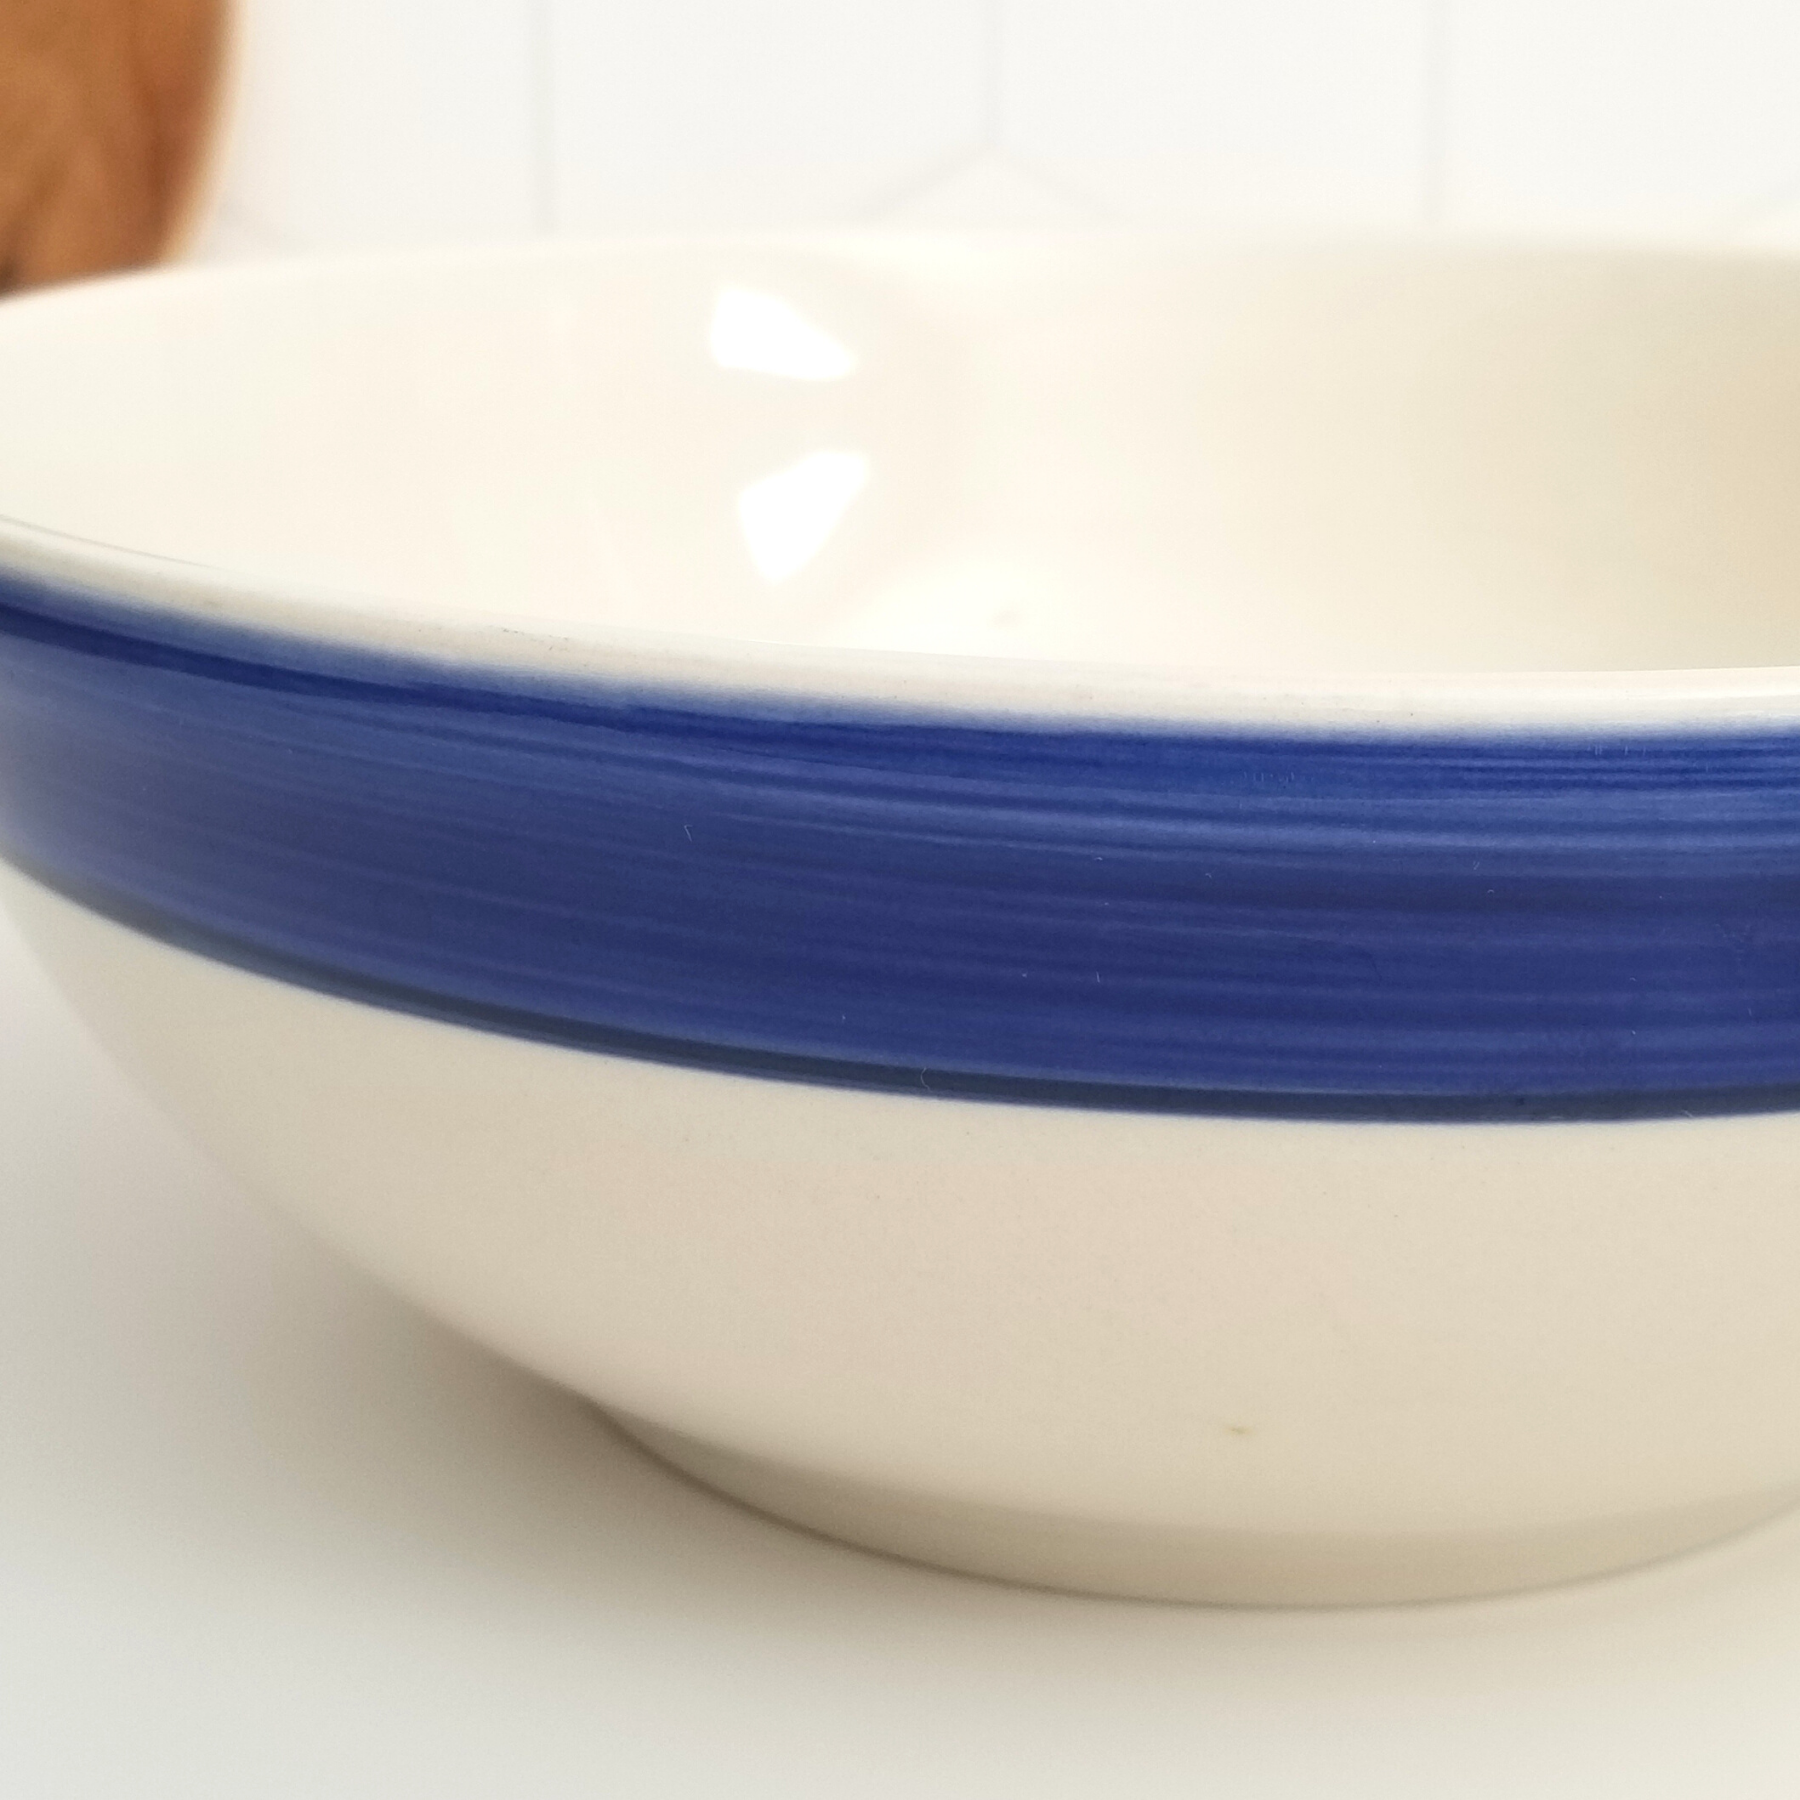 Vintage Blue and White Ceramic Mixing Bowl Closeup